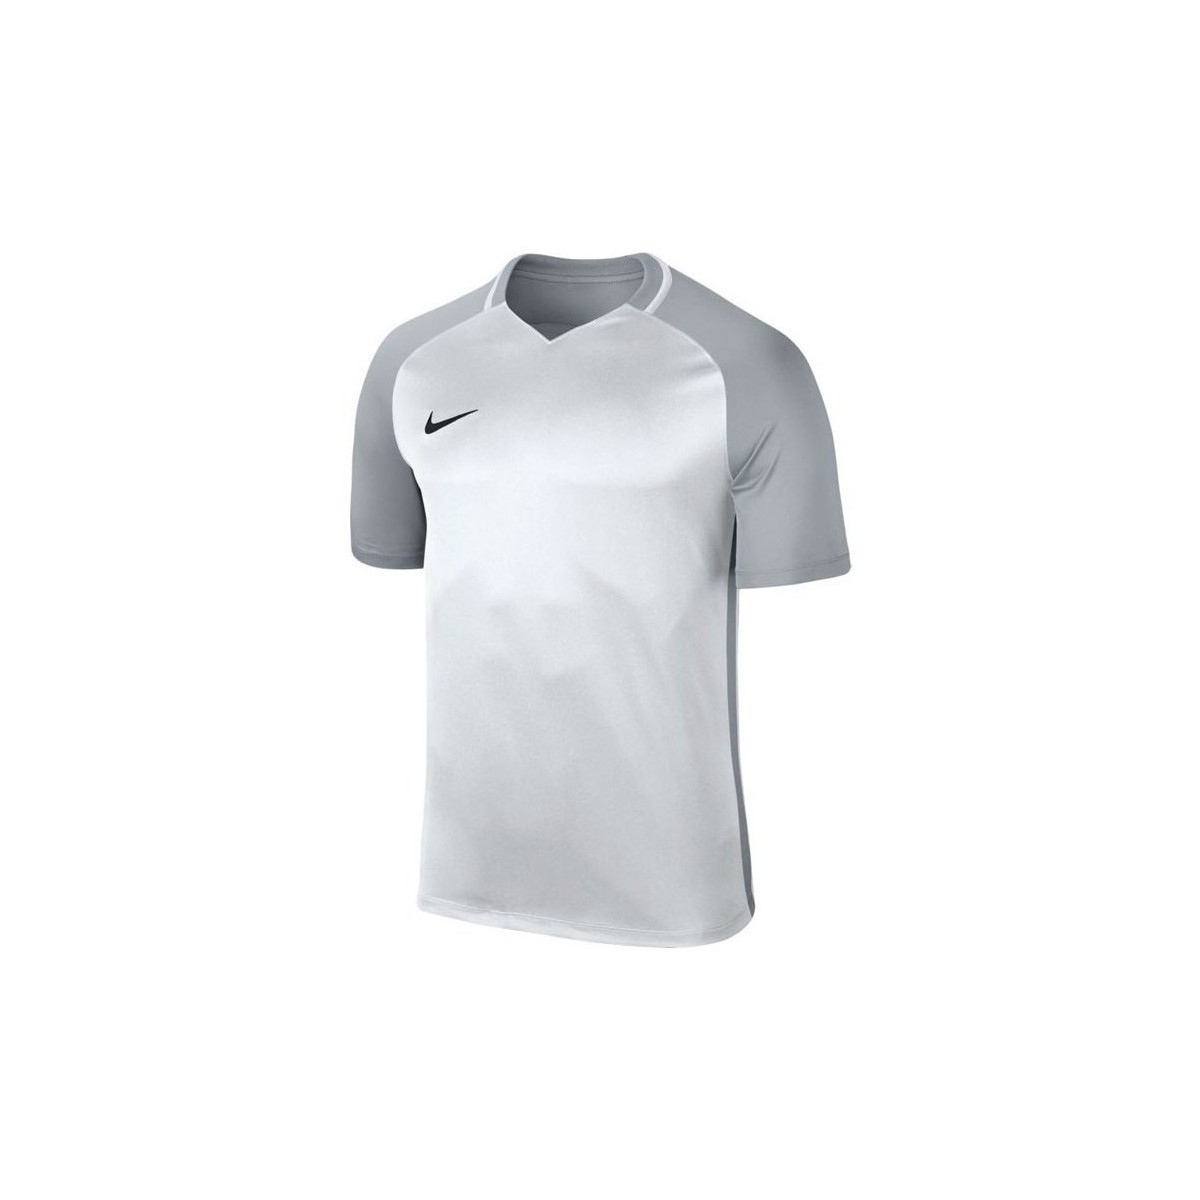 Oblečenie Chlapec Tričká s krátkym rukávom Nike JR Dry Trophy Iii Jersey Sivá, Strieborná